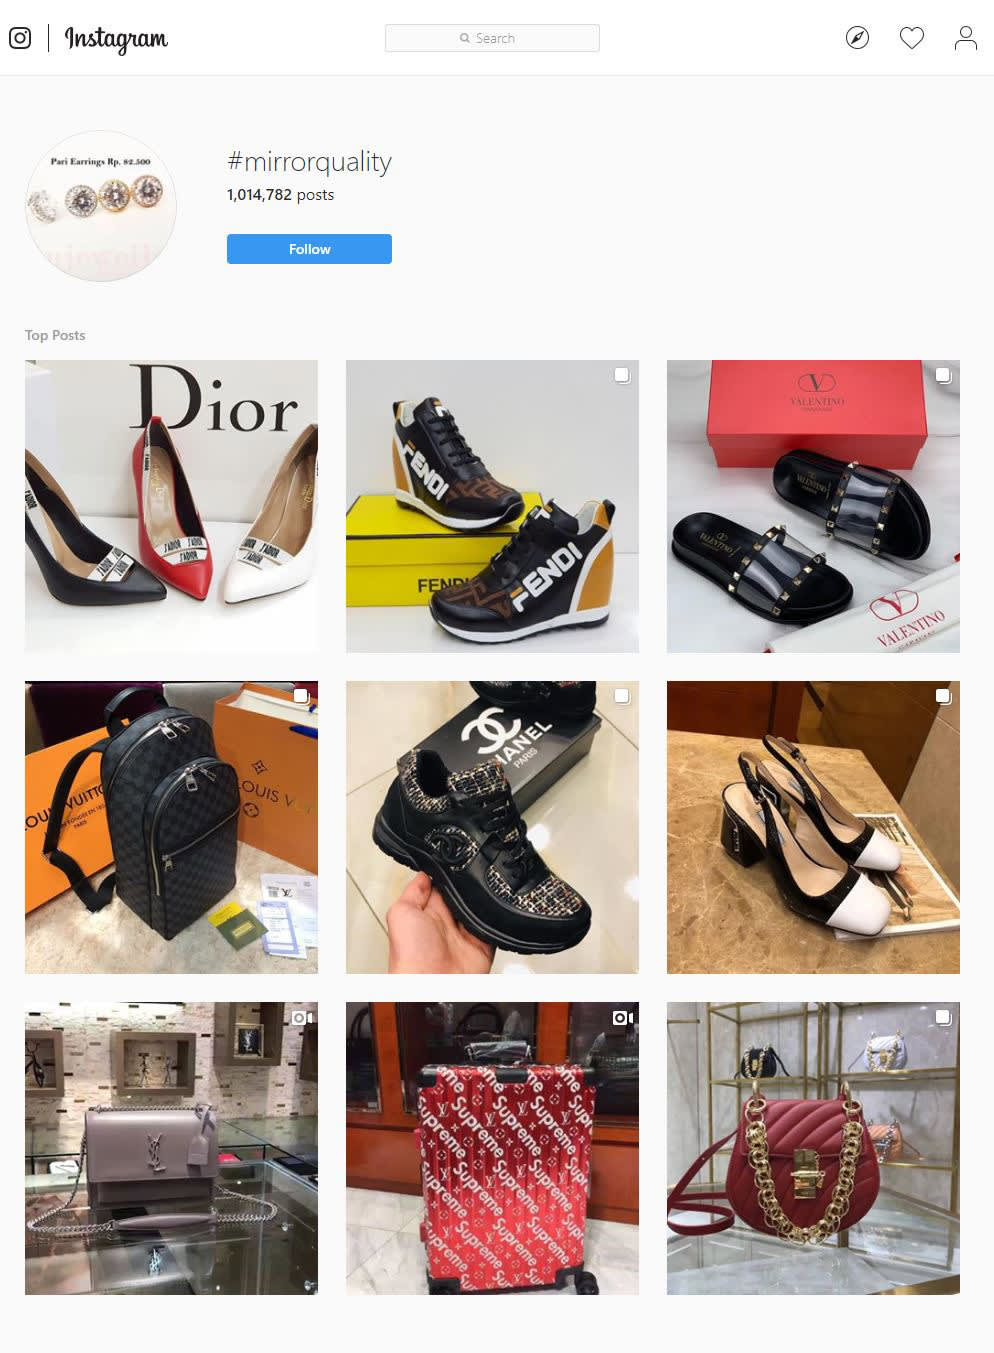 HIGHSNOBIETY on Instagram: “@louisvuitton has blown up a branded